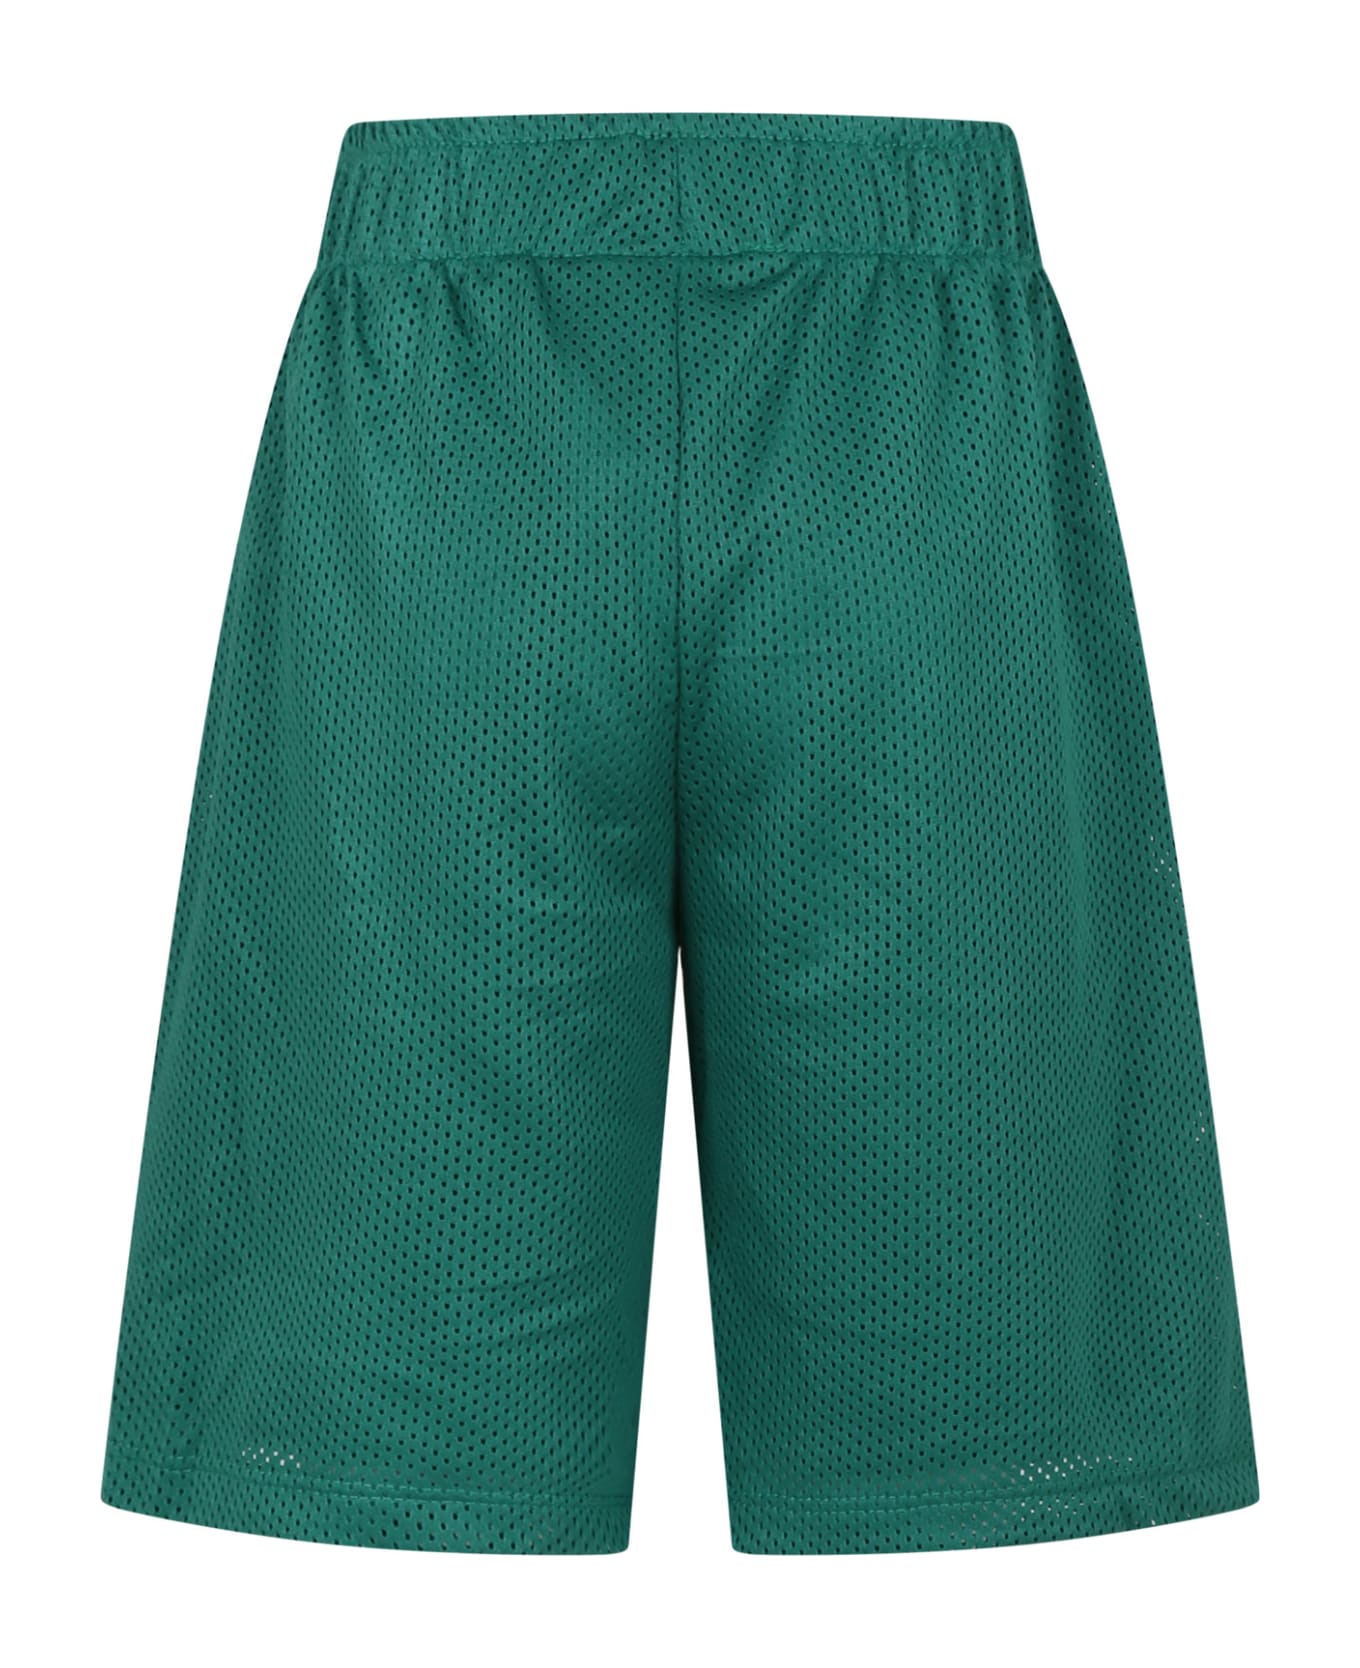 Mini Rodini Green Sports Shorts For Kids With Basketball - Green